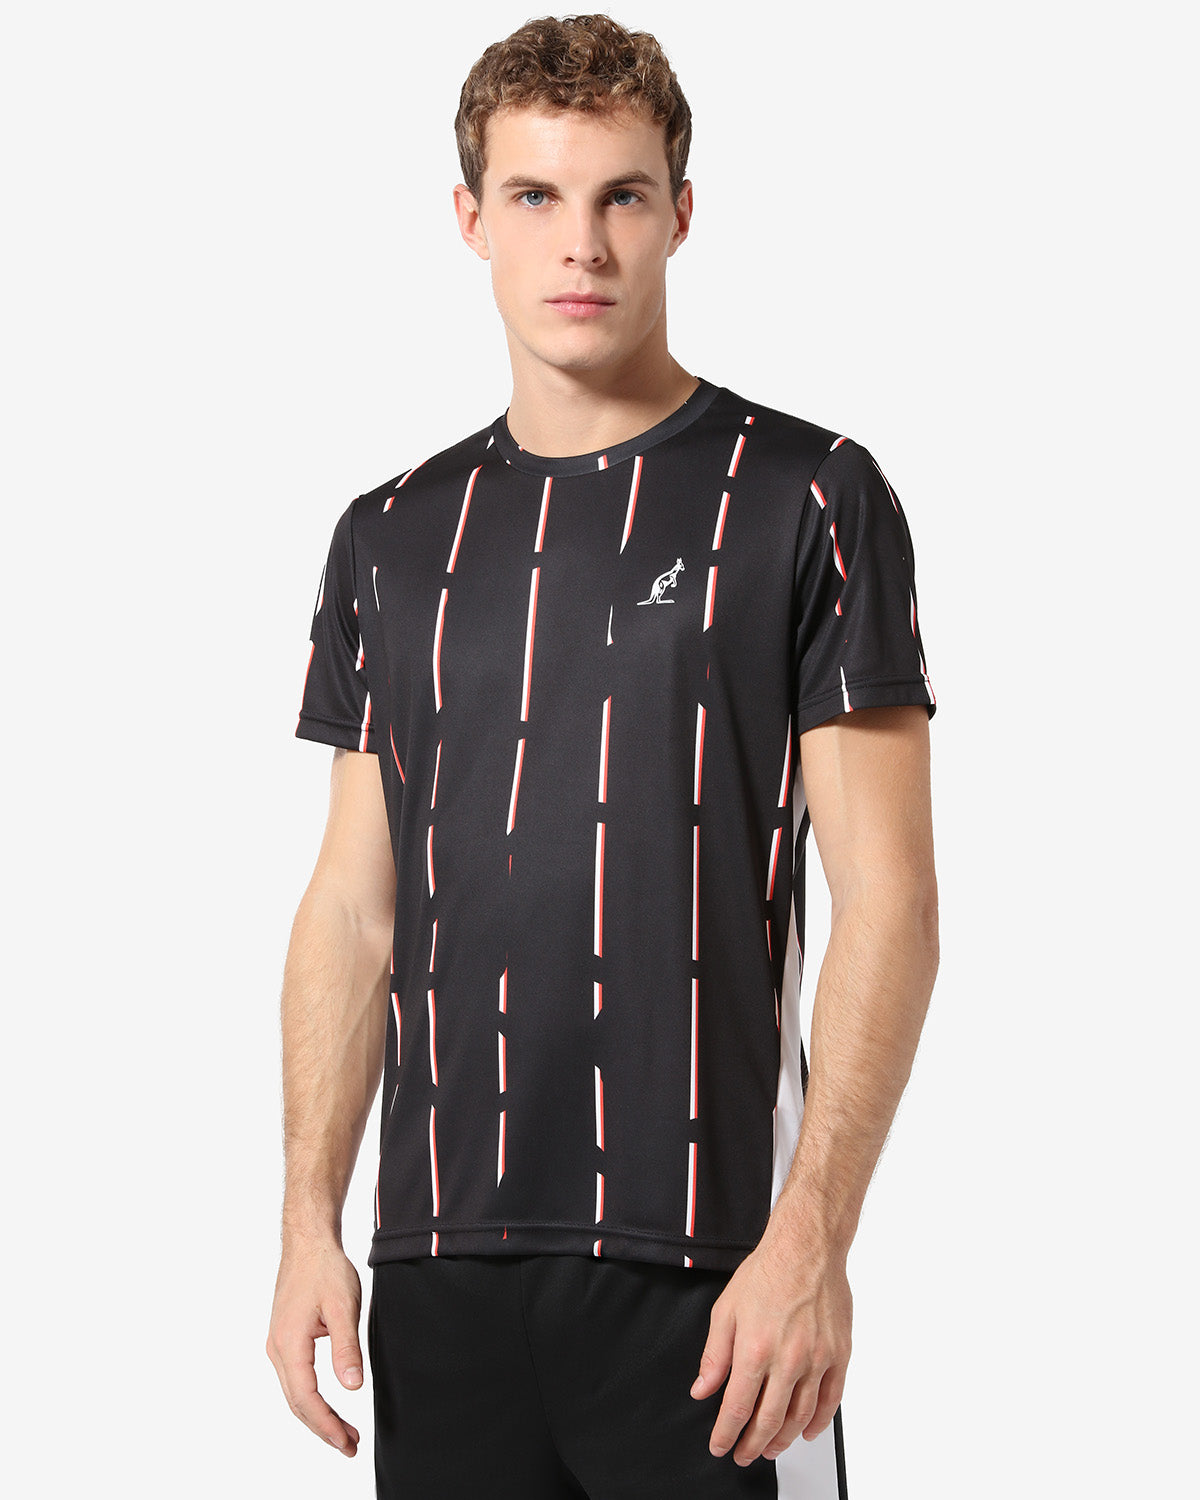 Stripe T-shirt: Australian Tennis